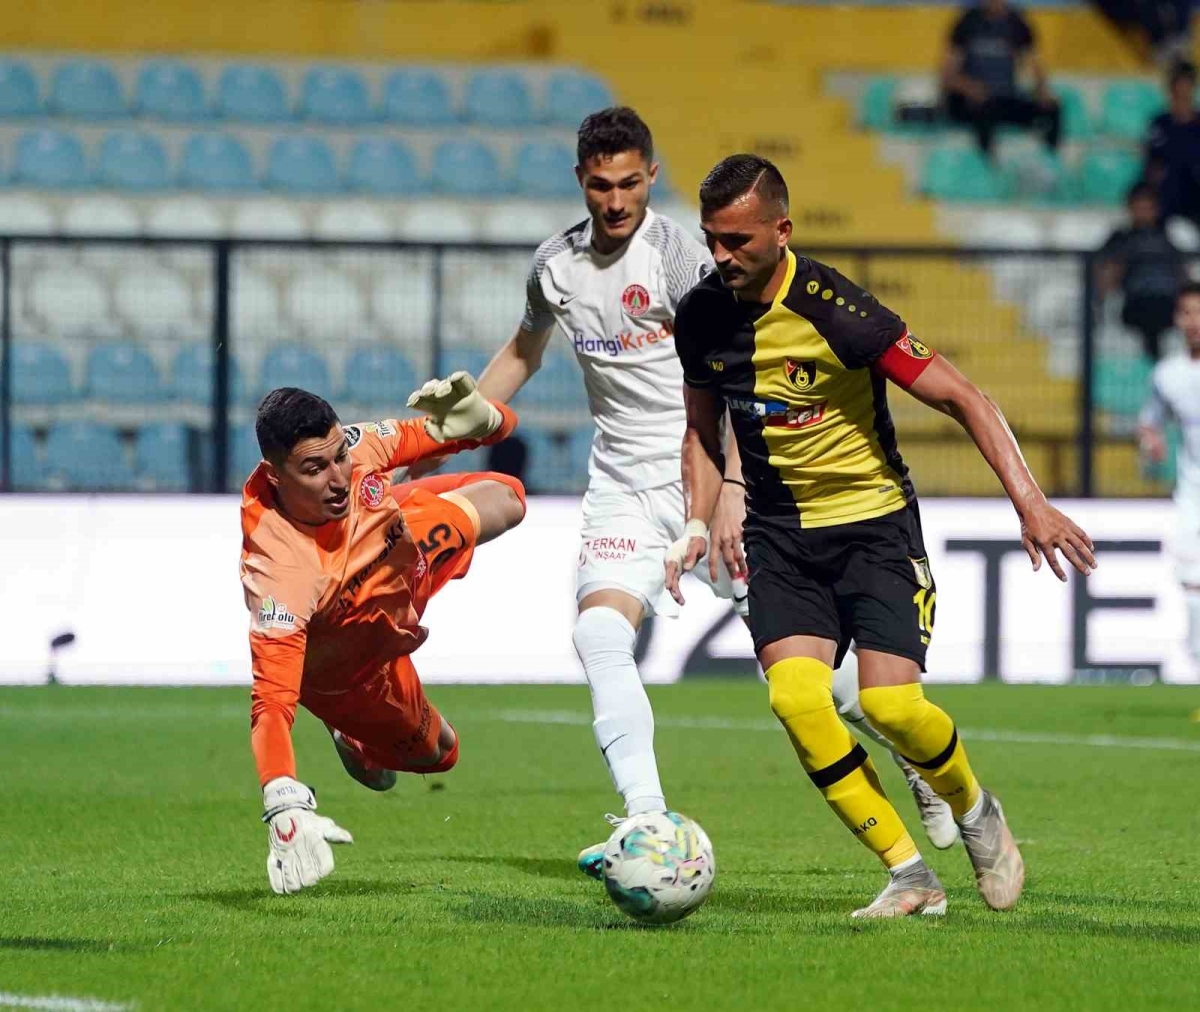 Spor Toto Süper Lig: İstanbulspor: 4 - Ümraniyespor: 0 (Maç sonucu)
